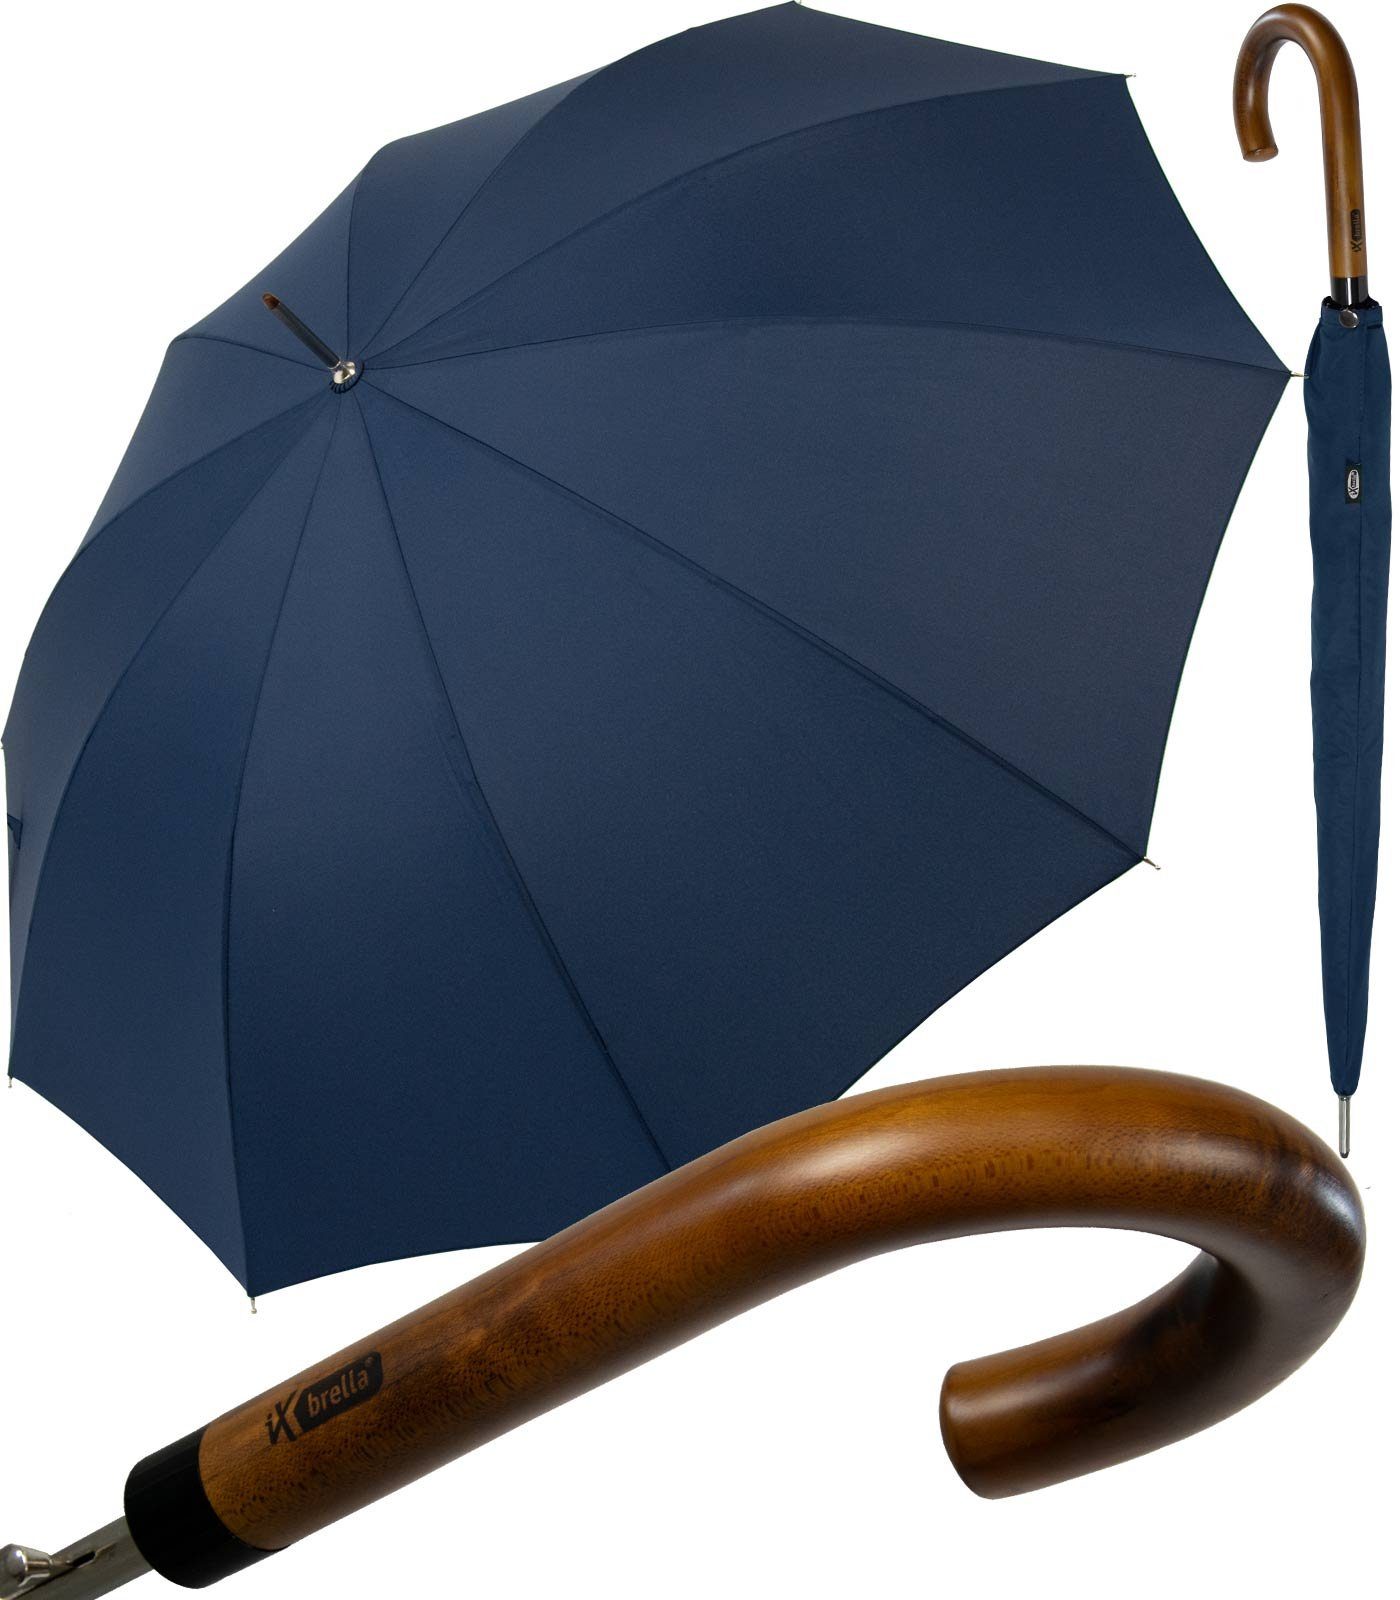 Echth, Quality Langregenschirm und klassisch-edel mit Automatik iX-brella High Herren-Schirm